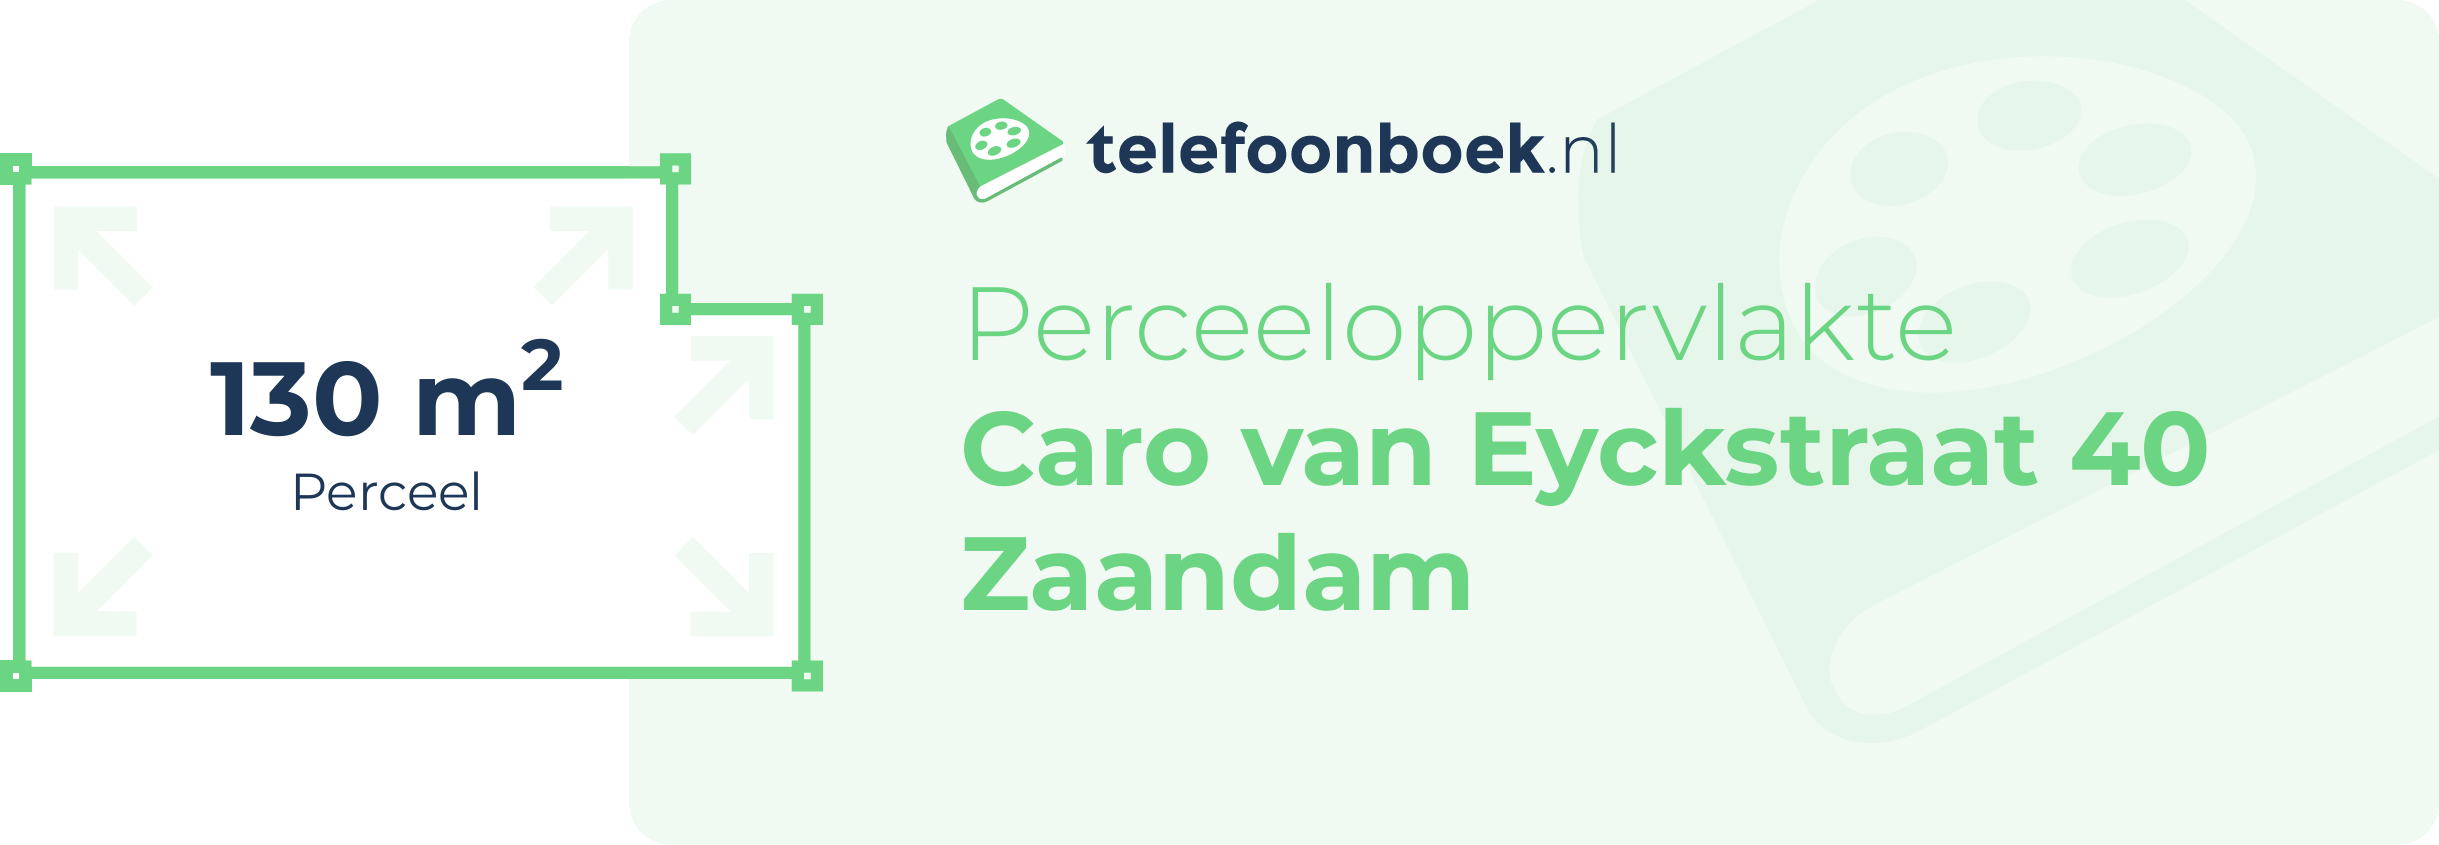 Perceeloppervlakte Caro Van Eyckstraat 40 Zaandam